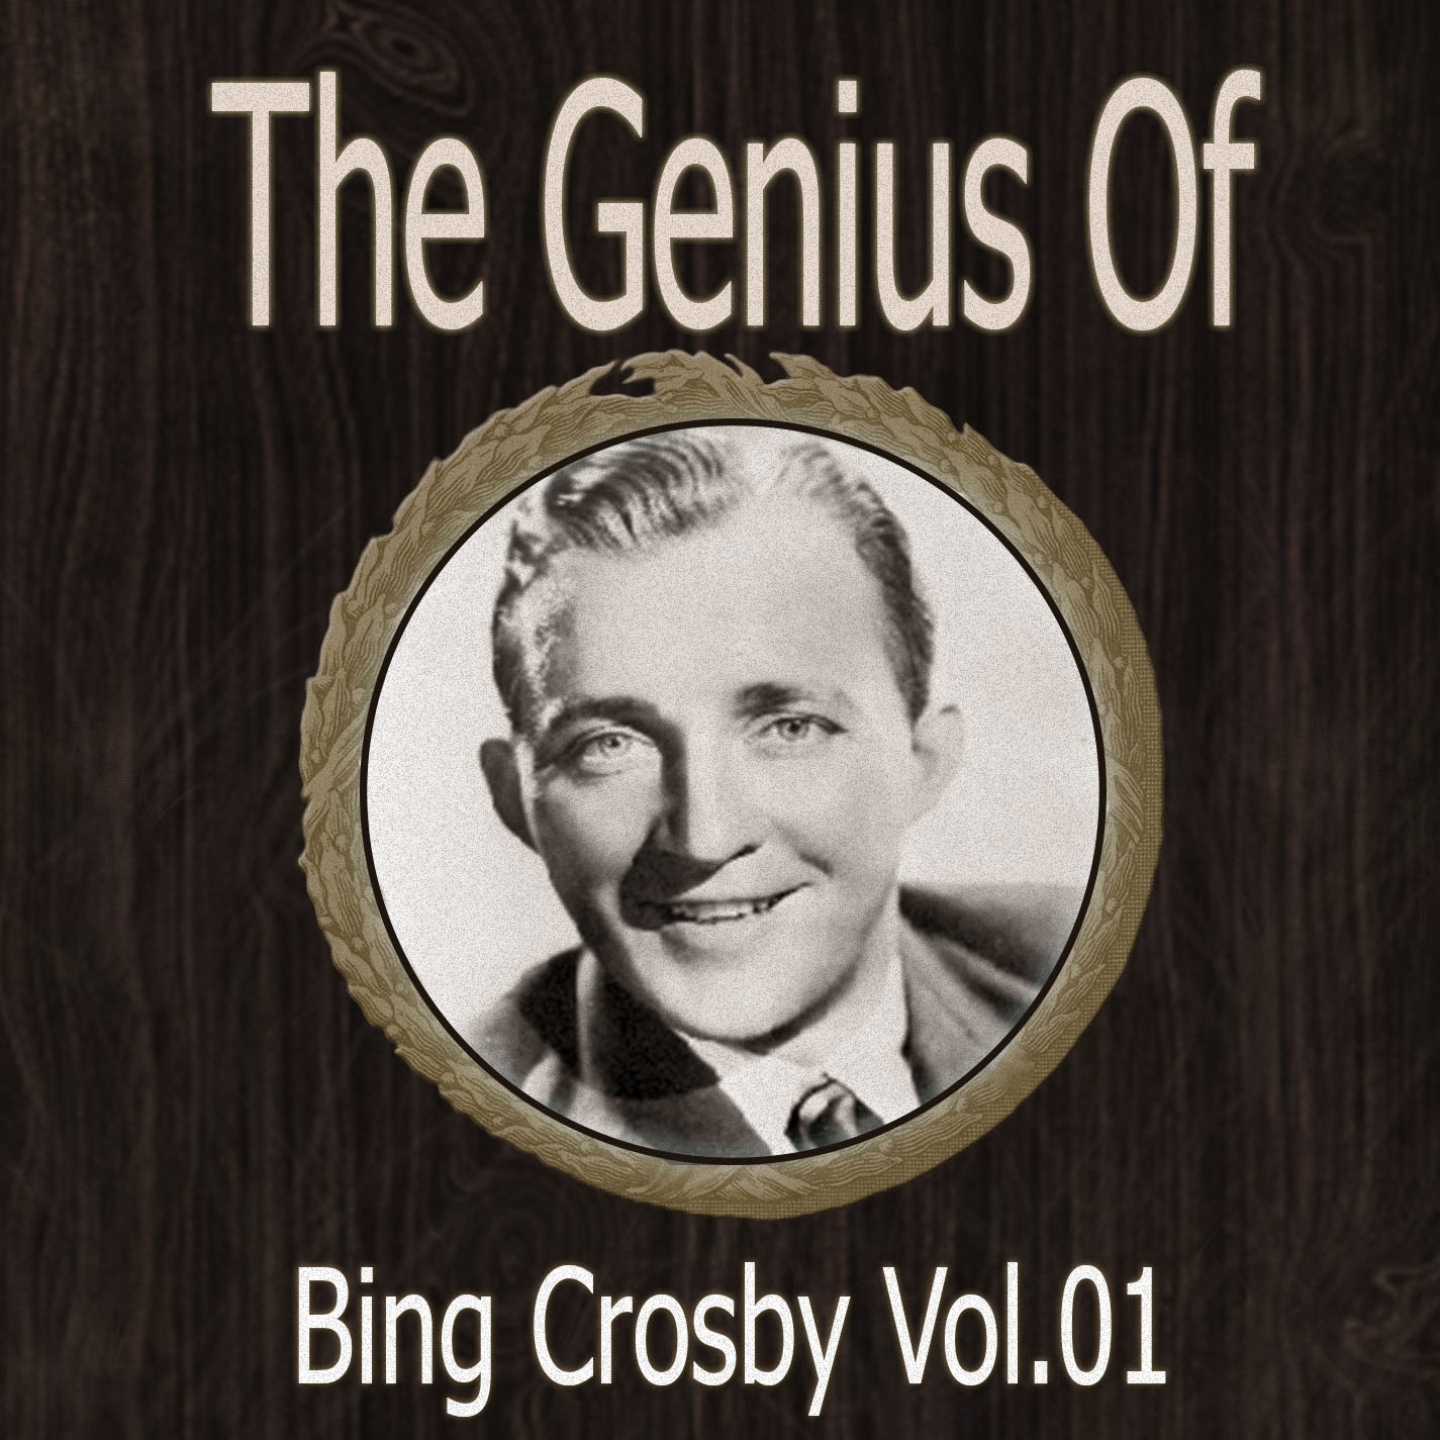 The Genius of Bing Crosby Vol 01